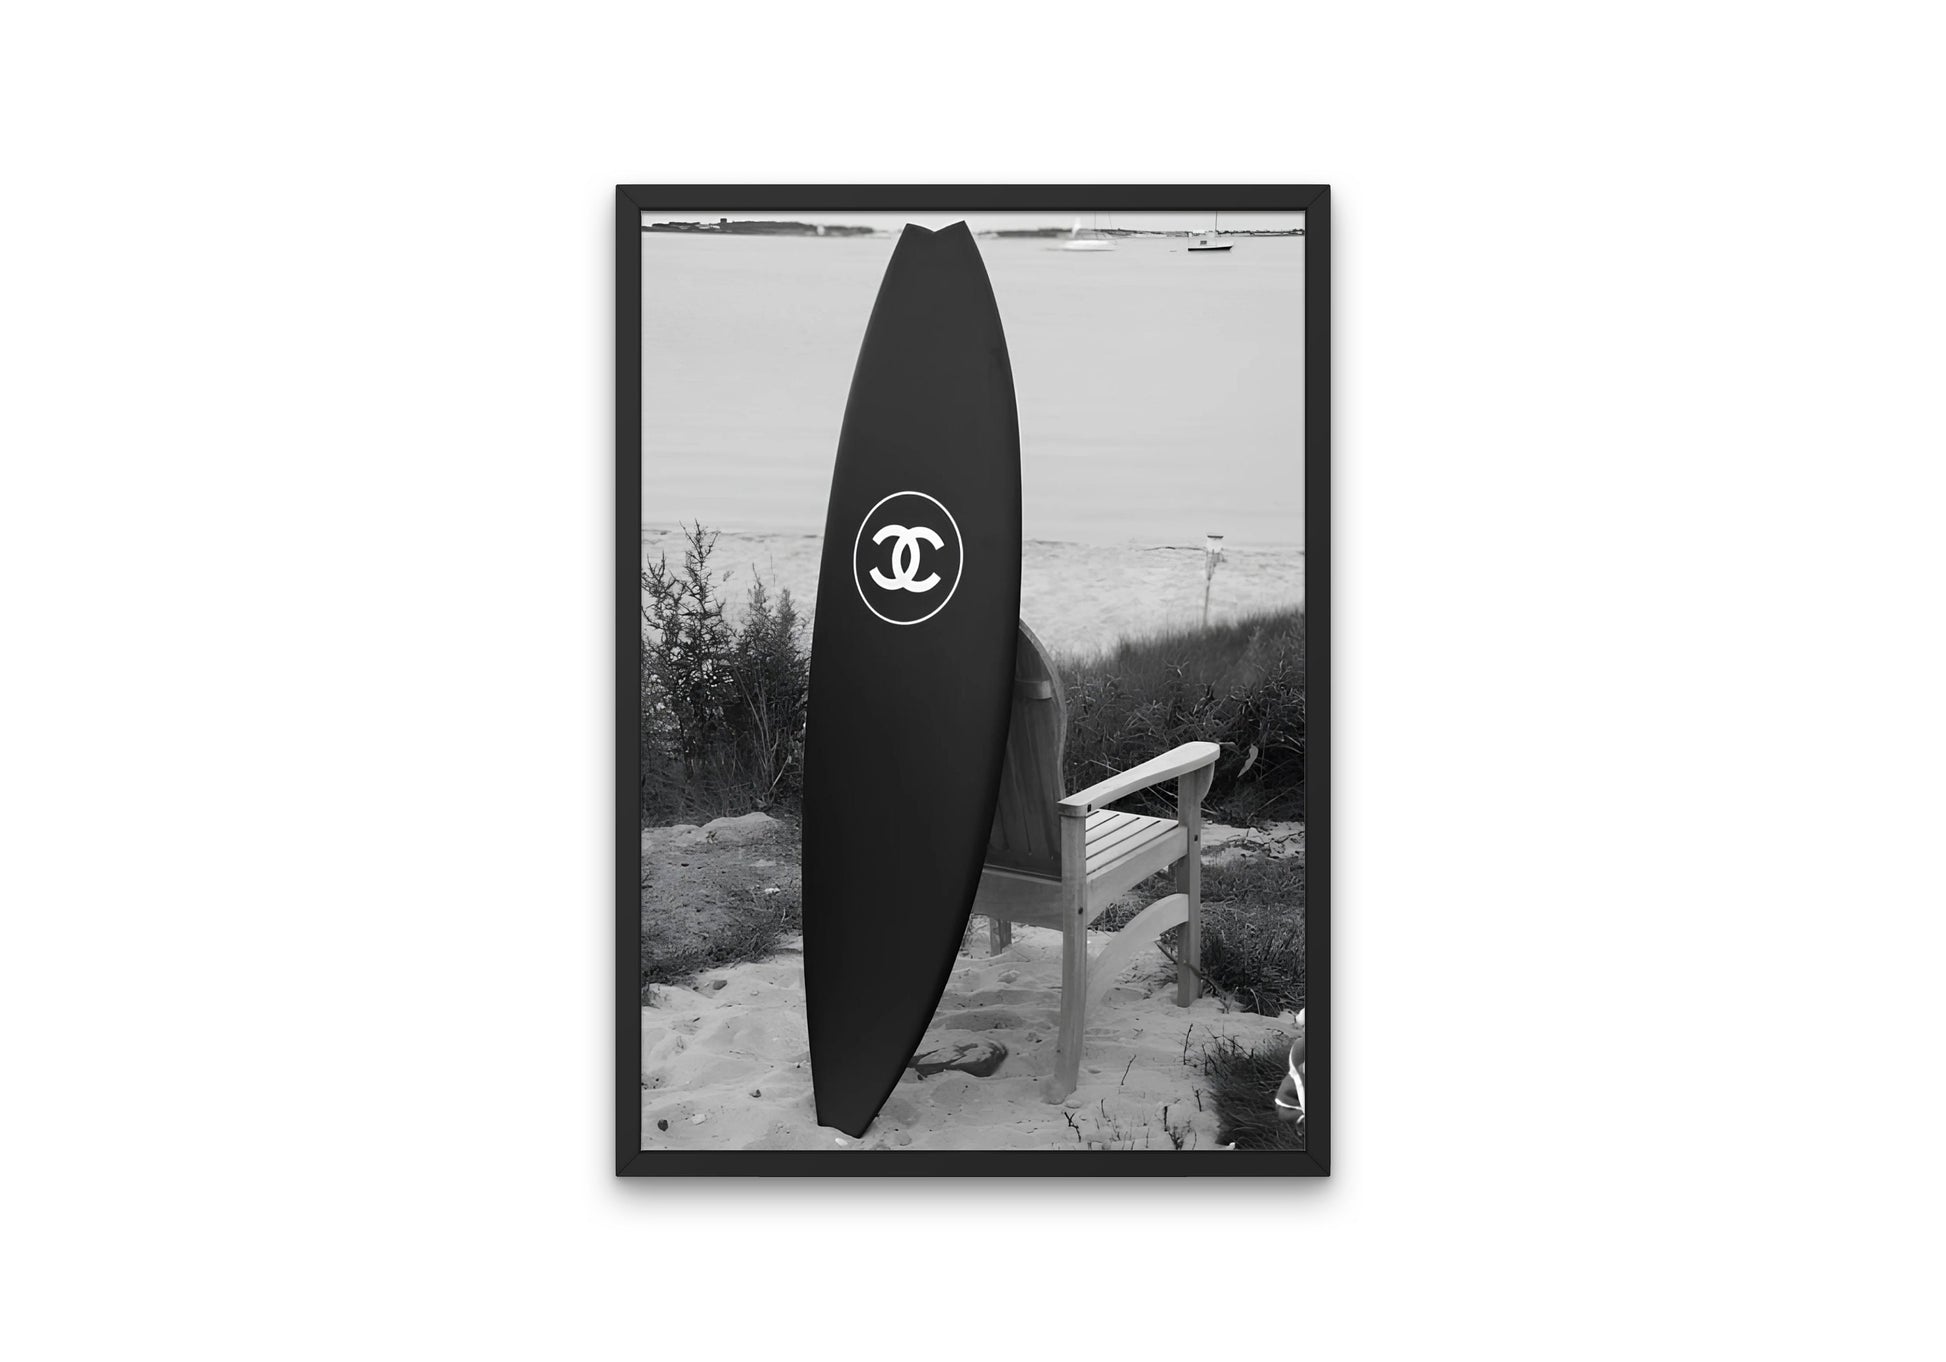 Black and White Luxury Surfboard Print DIGITAL DOWNLOAD, Fashion poster, High fashion wall art, Black & white designer print, surf board art